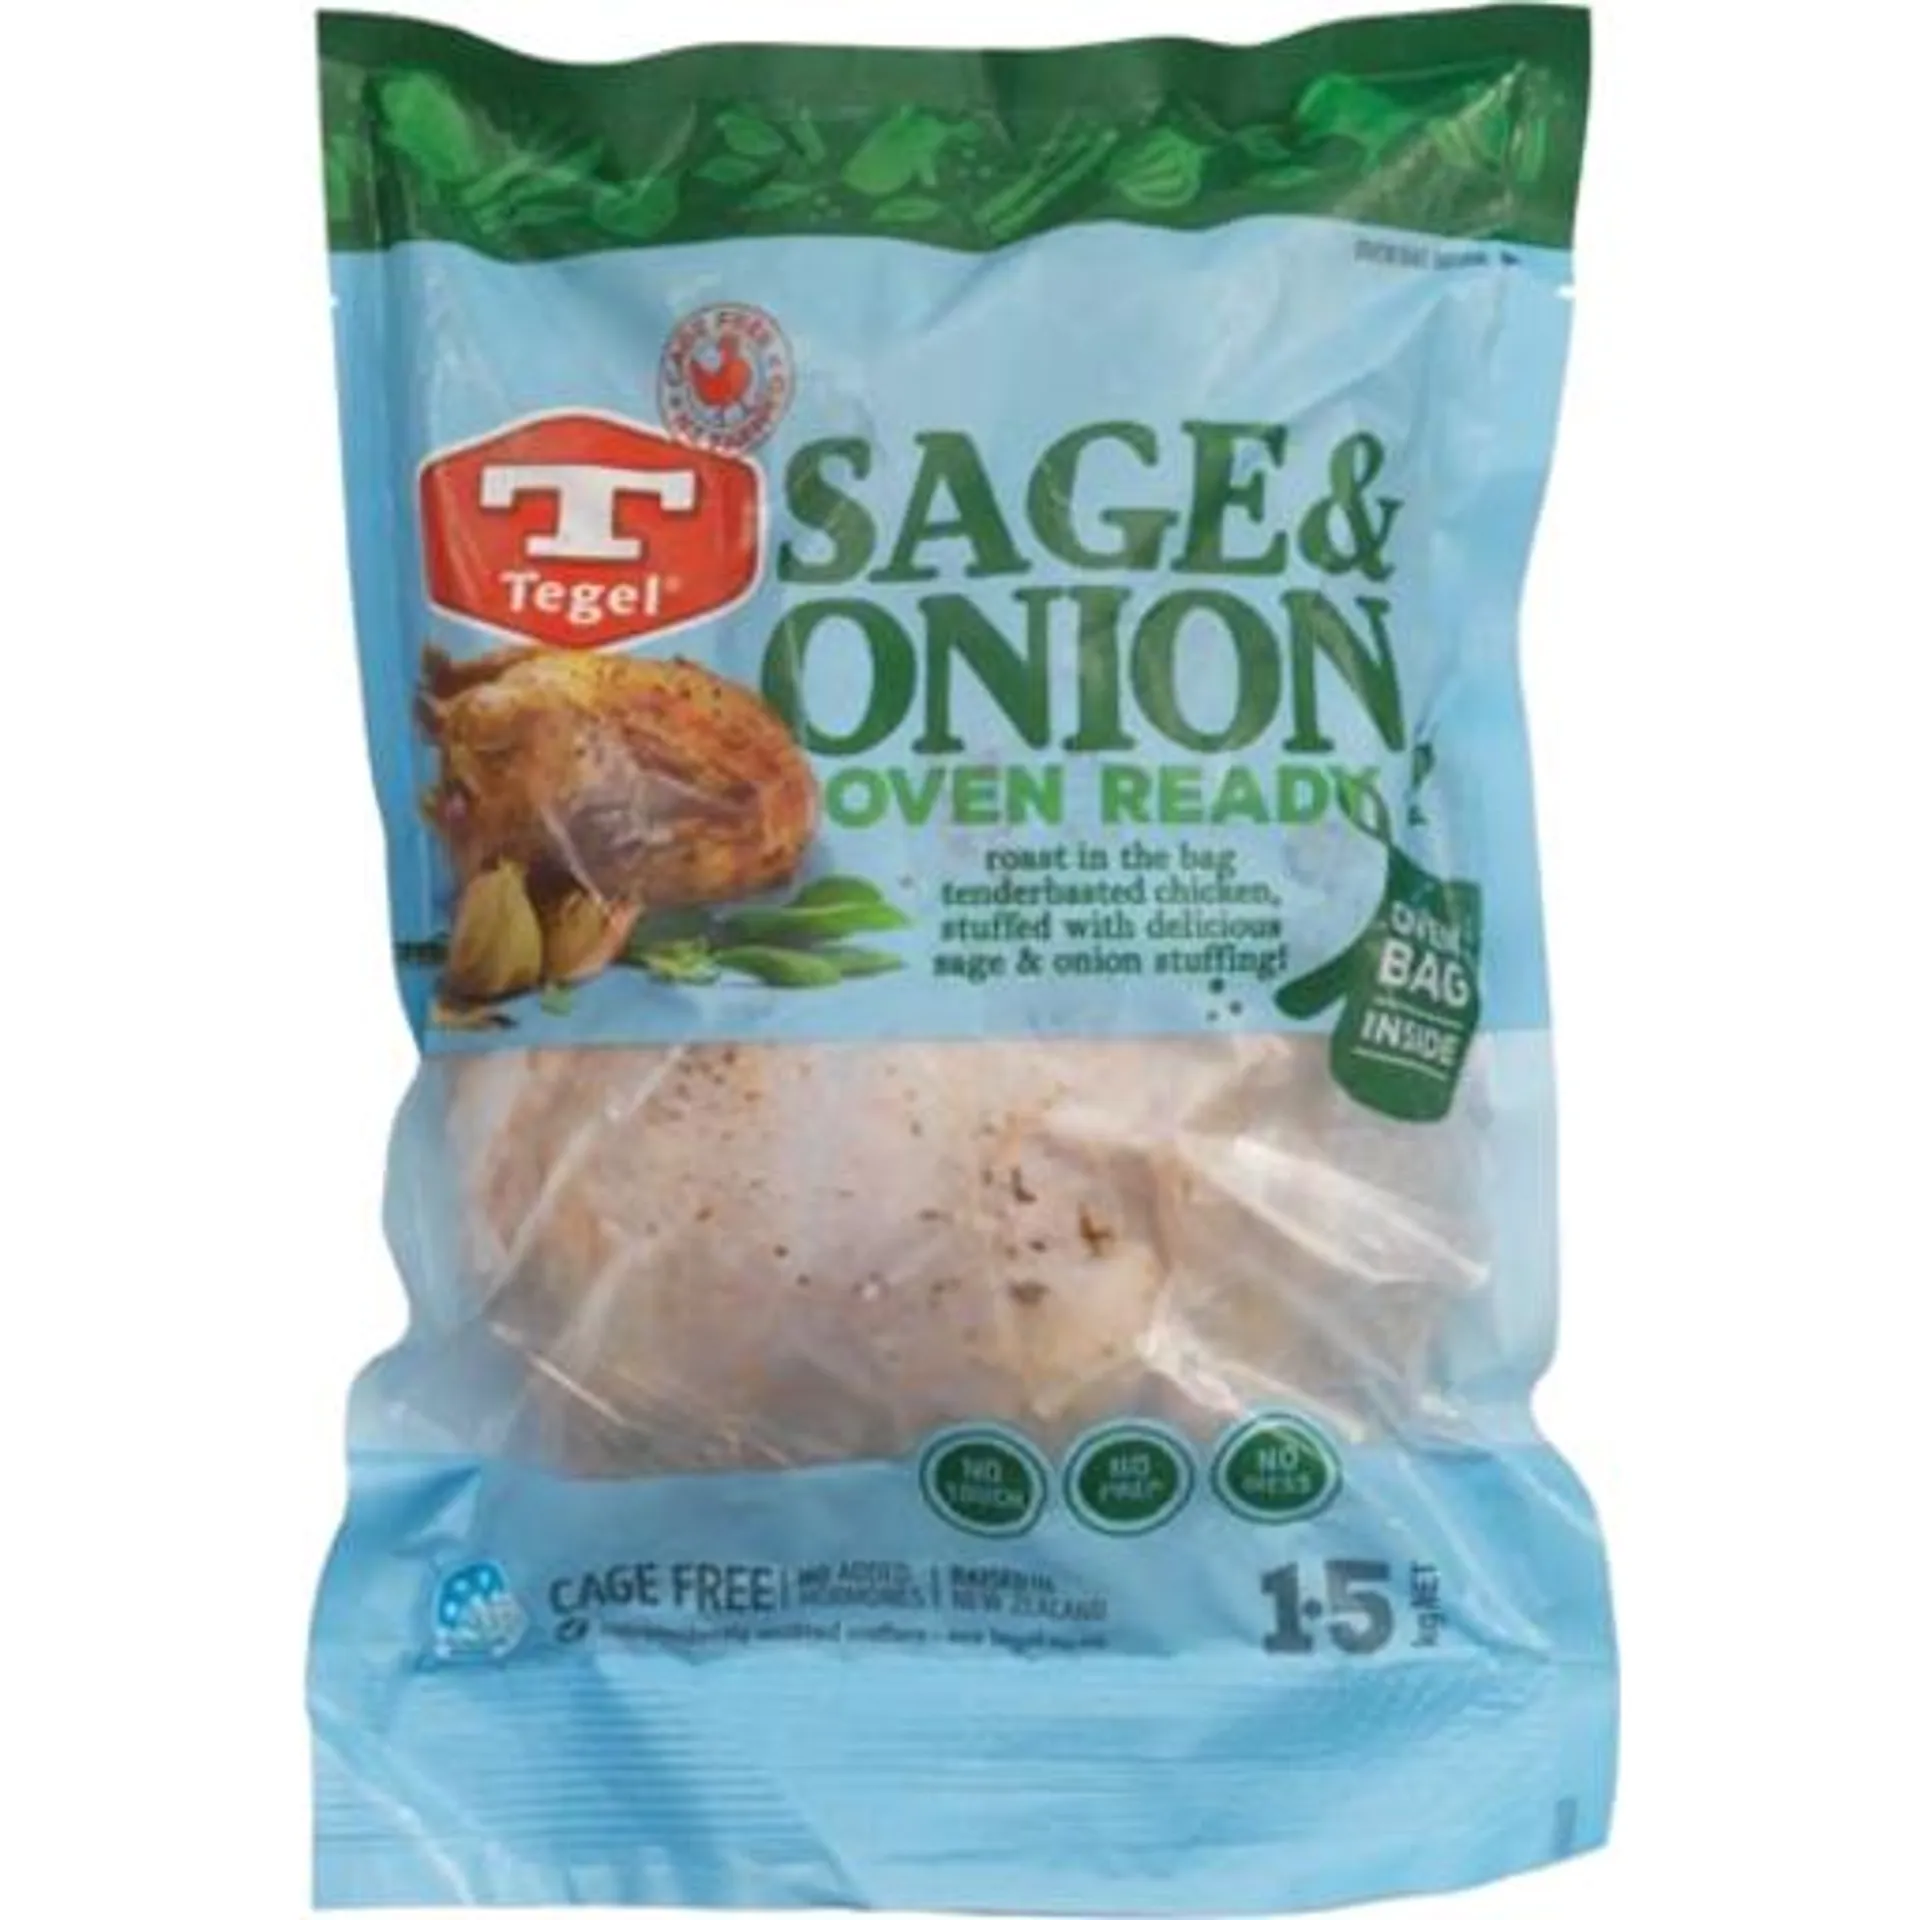 Tegel Chicken Ready to Roast Sage & Onion 1.5kg